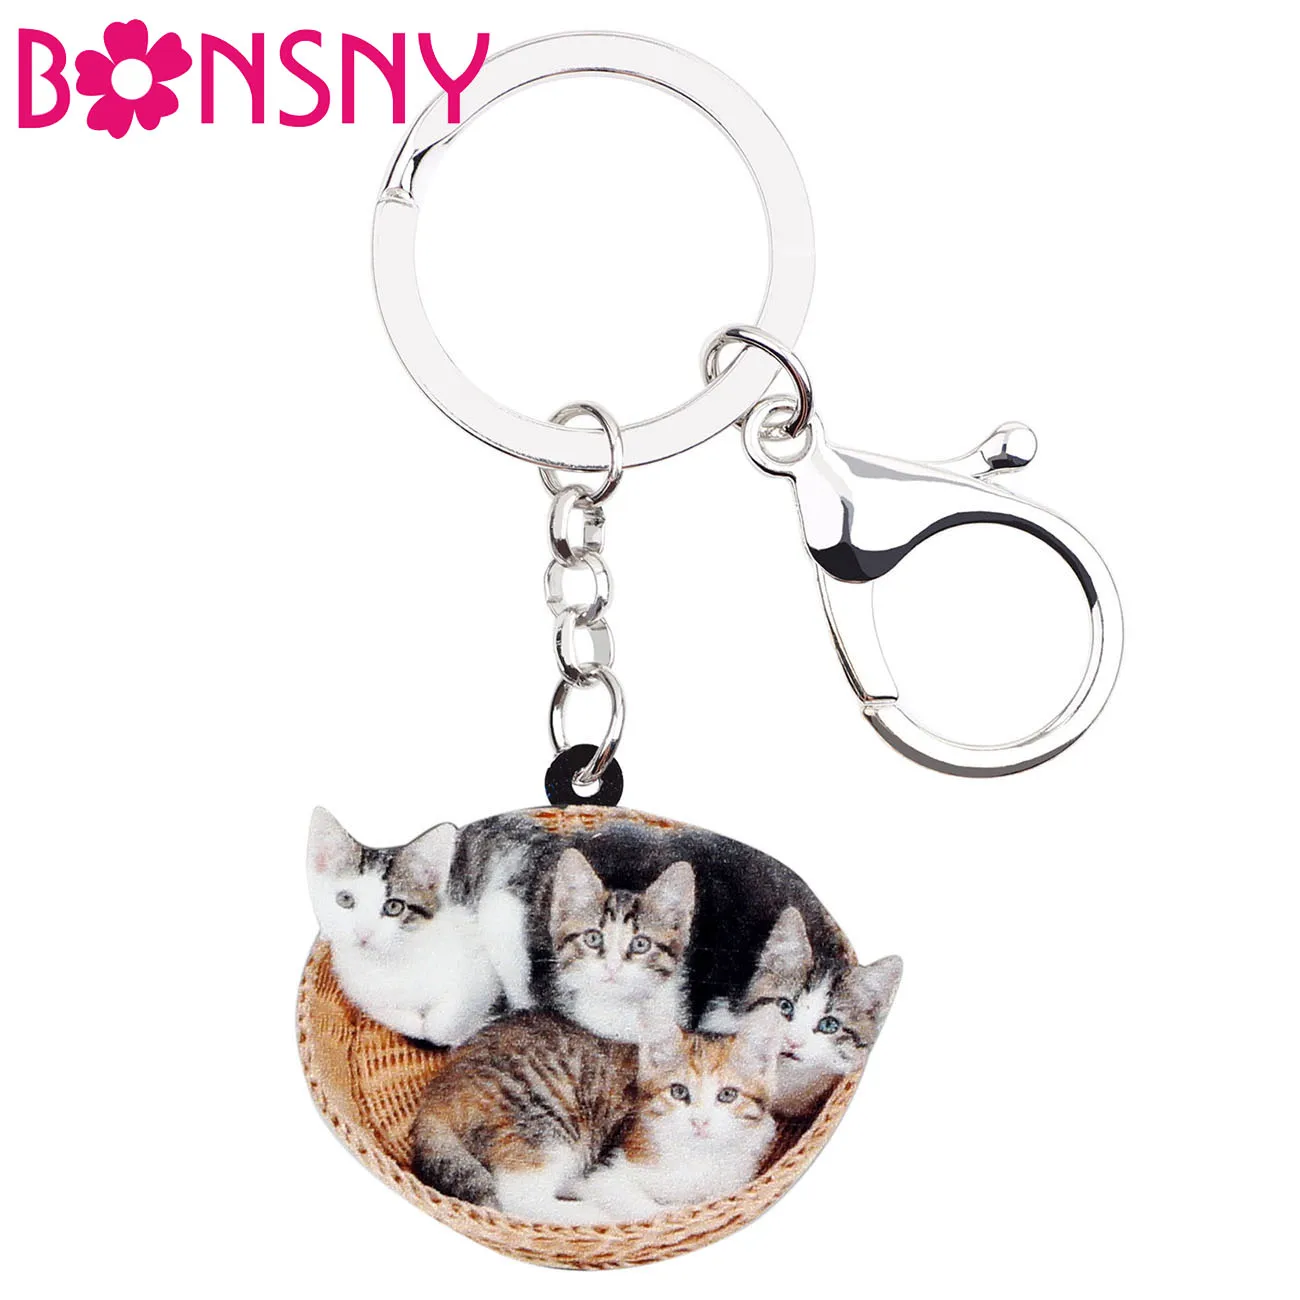 

Bonsny Acrylic Sweet Basket Cat Kitten Key Chains Keychains Holder Cute Animal Gift Pets Jewelry For Women Girls Bag Car Pendant